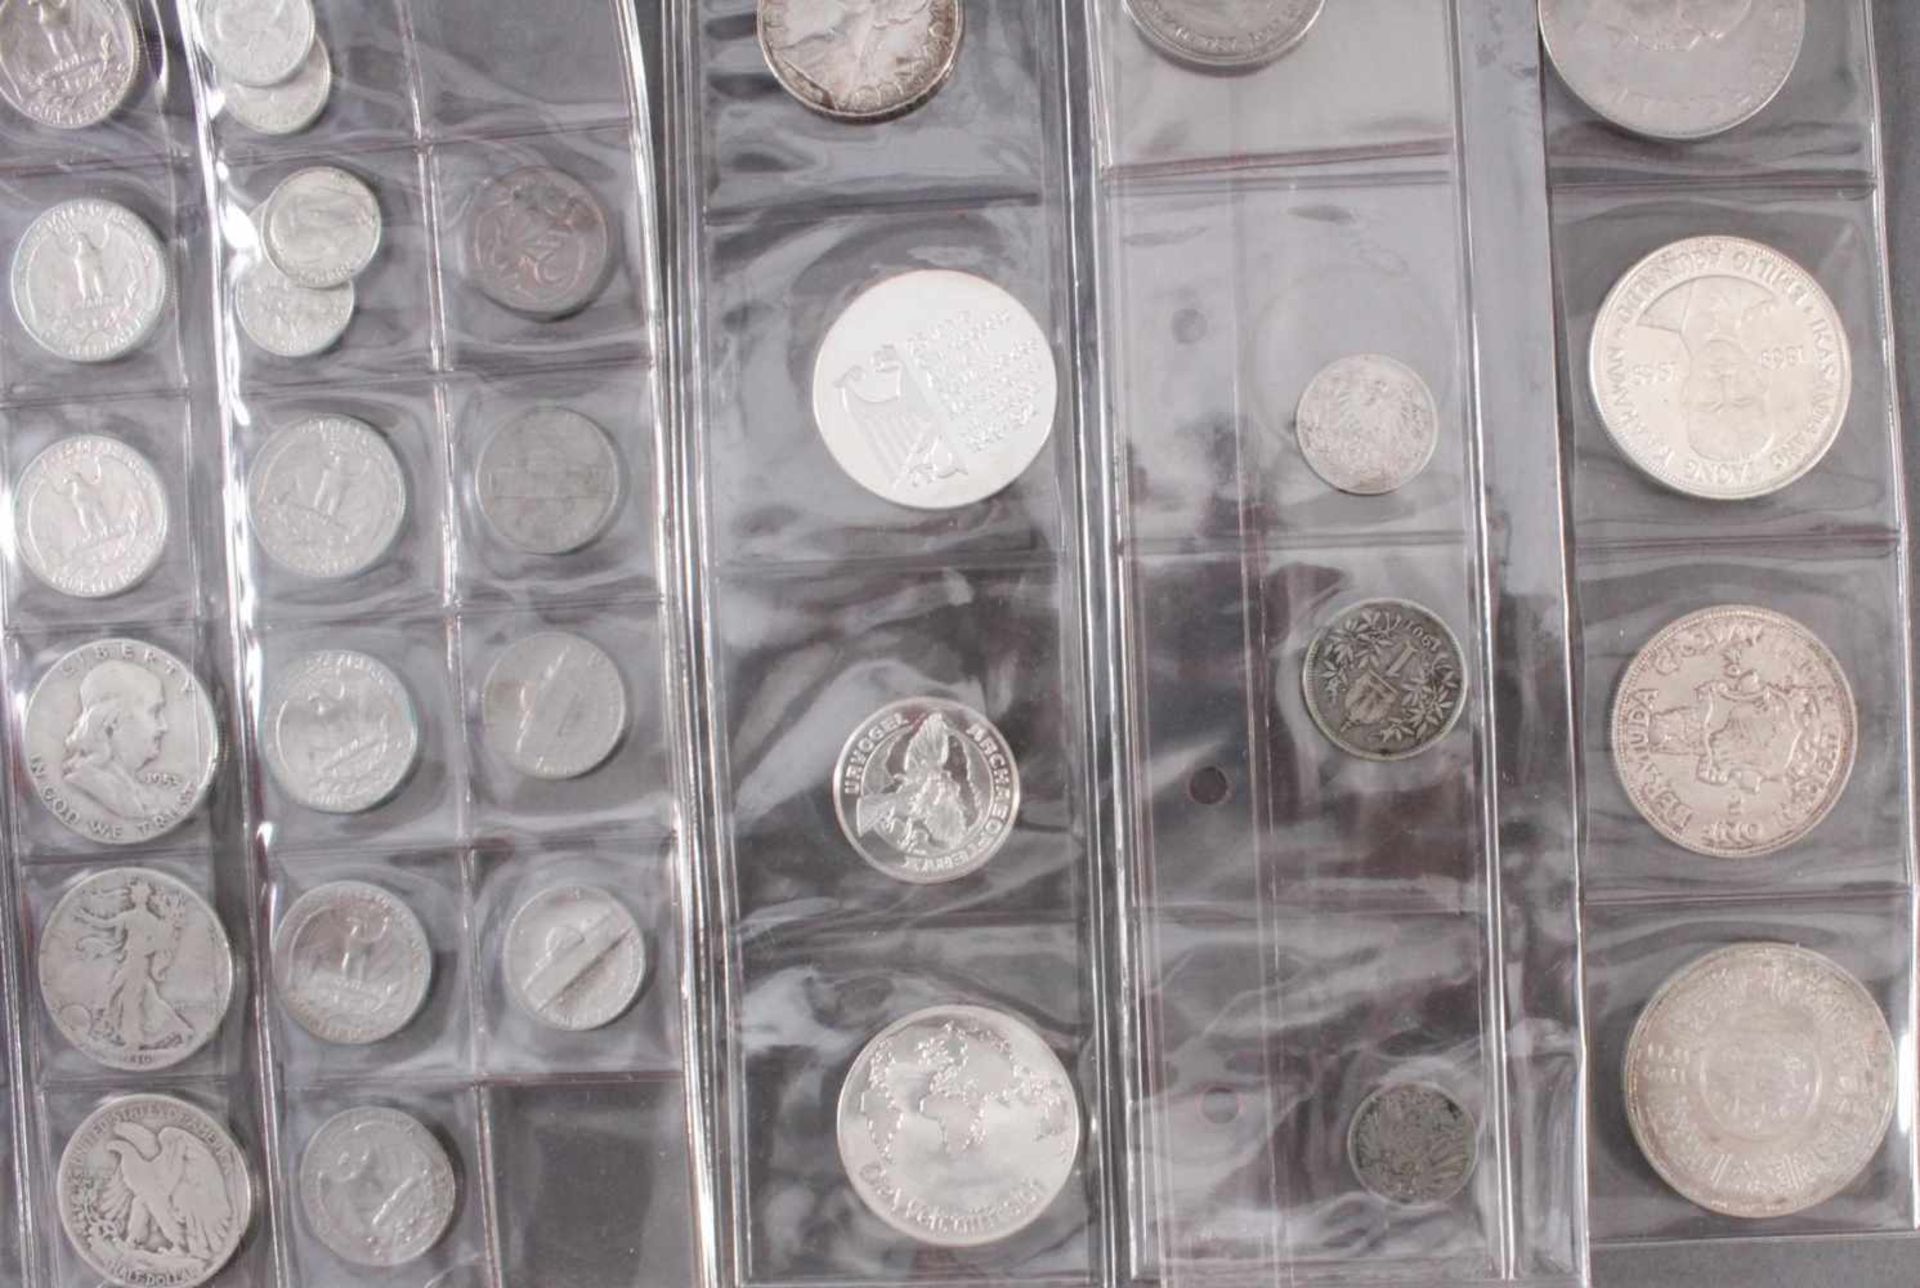 Münzen und Silbermünzen KonvolutDabei USA, 1x Liberty Dollar, 4x Half Dollar, 7x Quarter Dollar, USA - Bild 3 aus 5